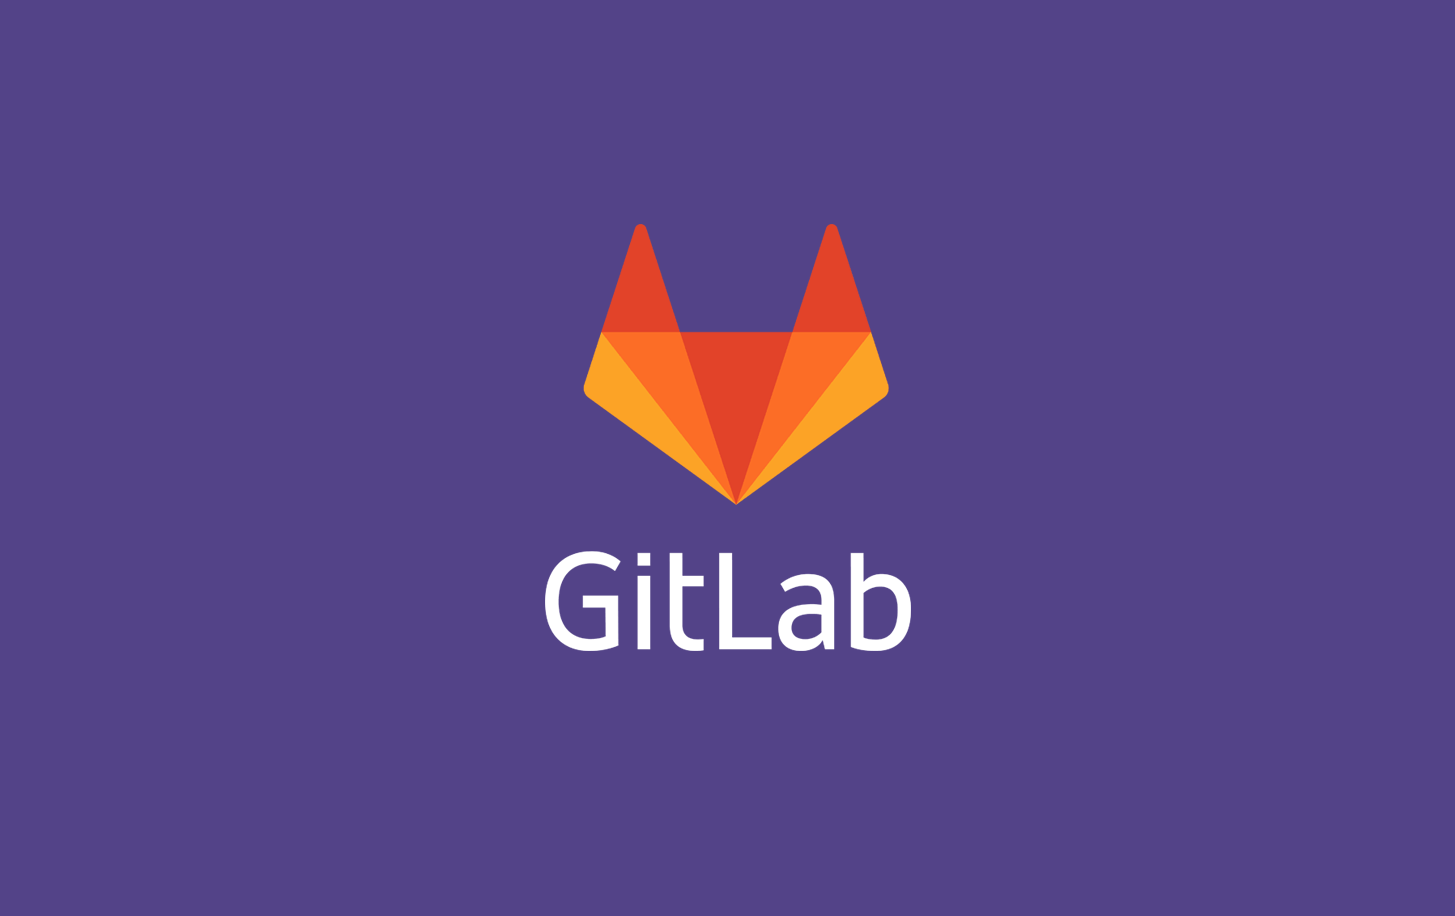 Gitlab users